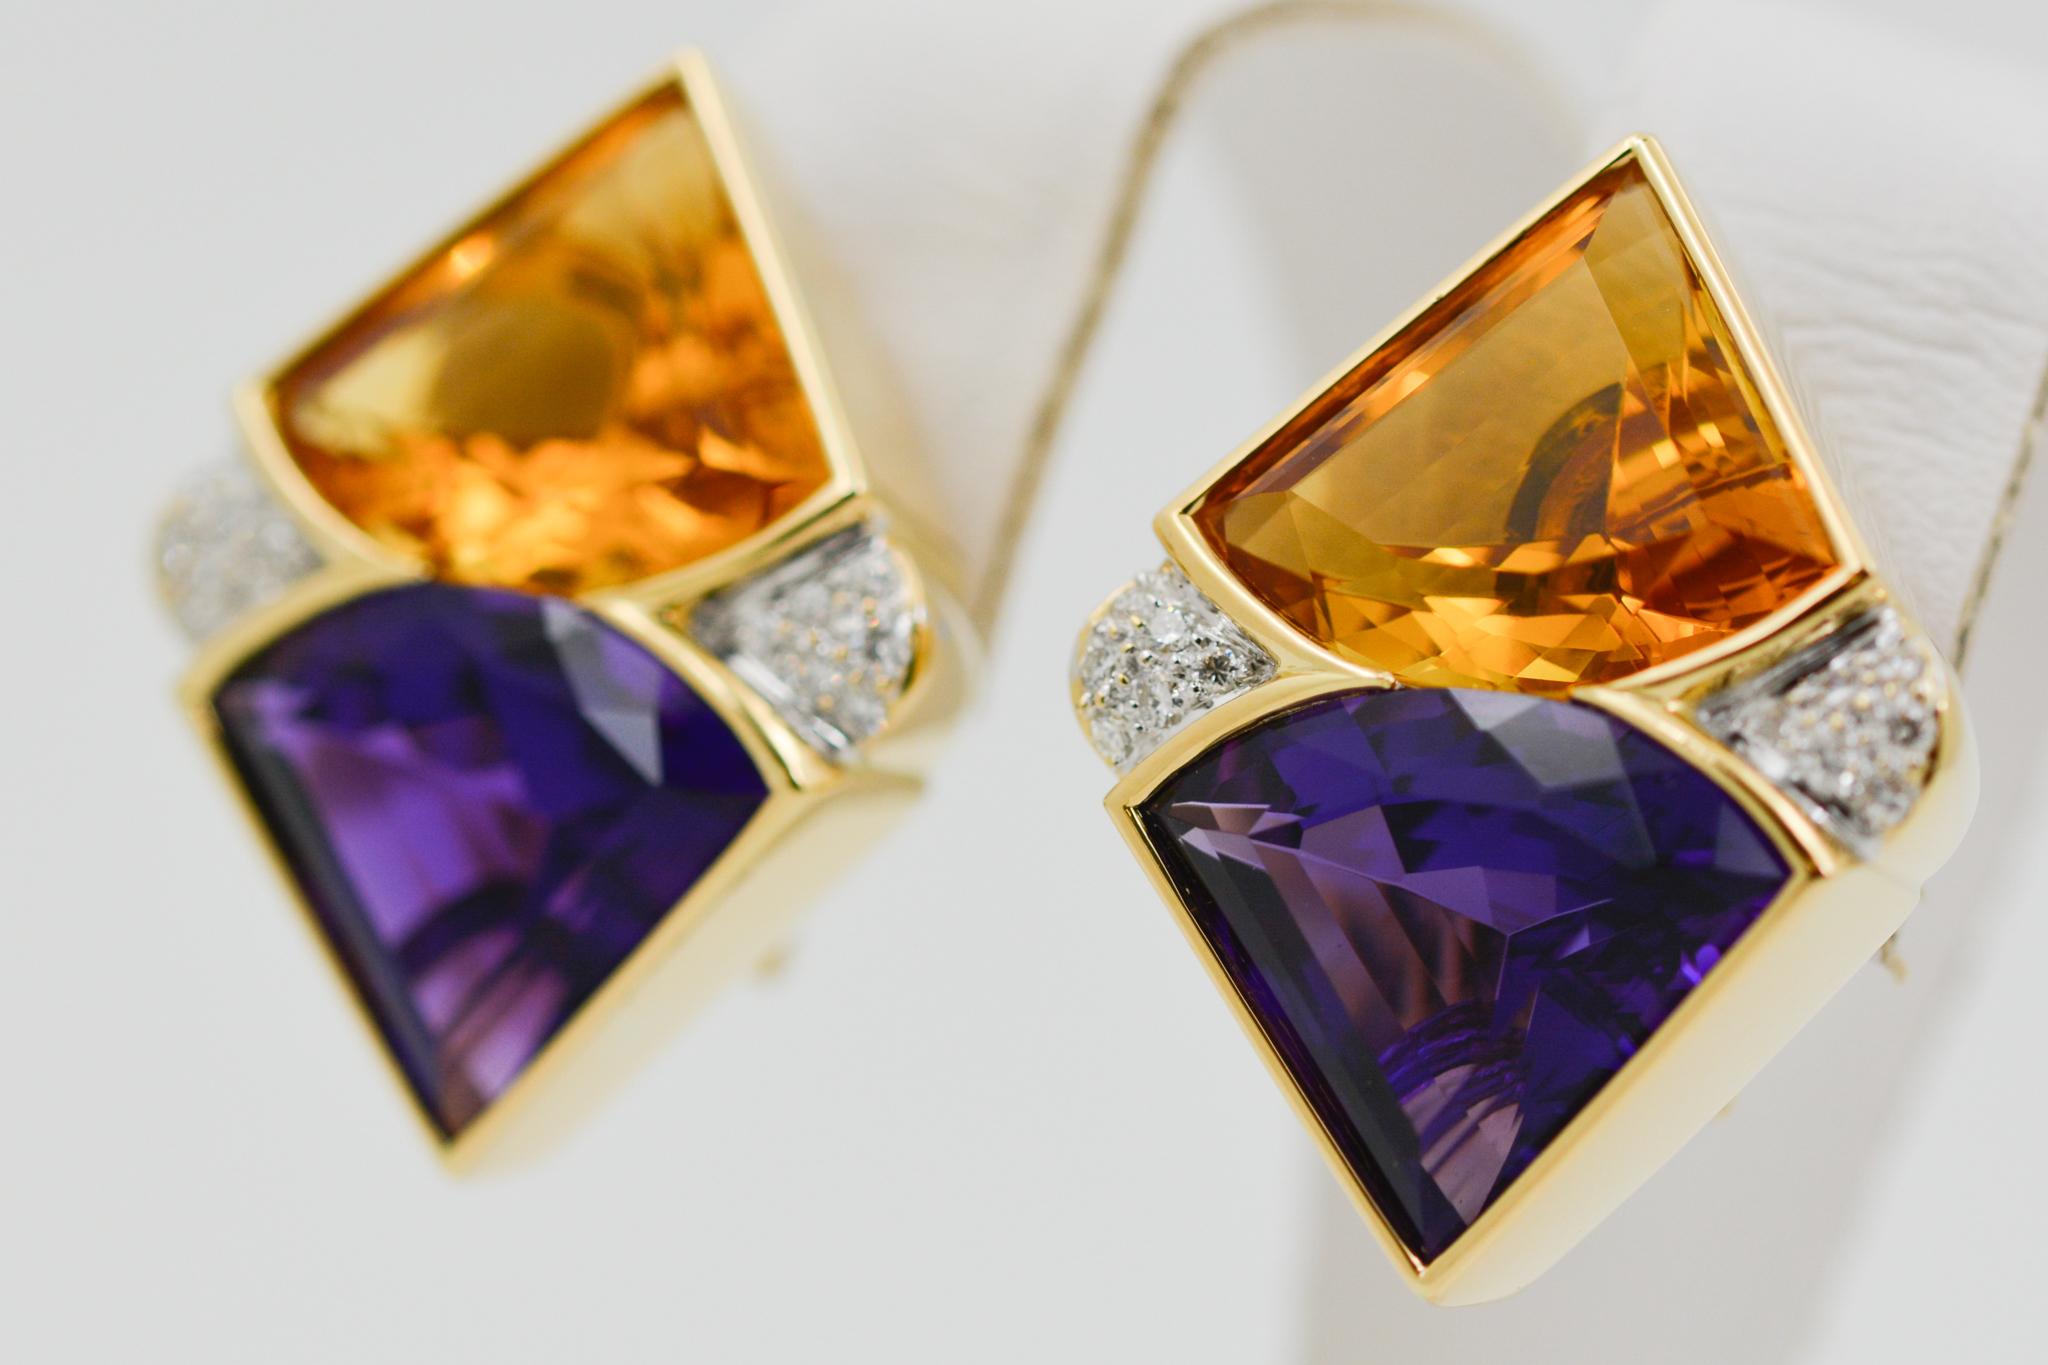 24 carat diamond earrings